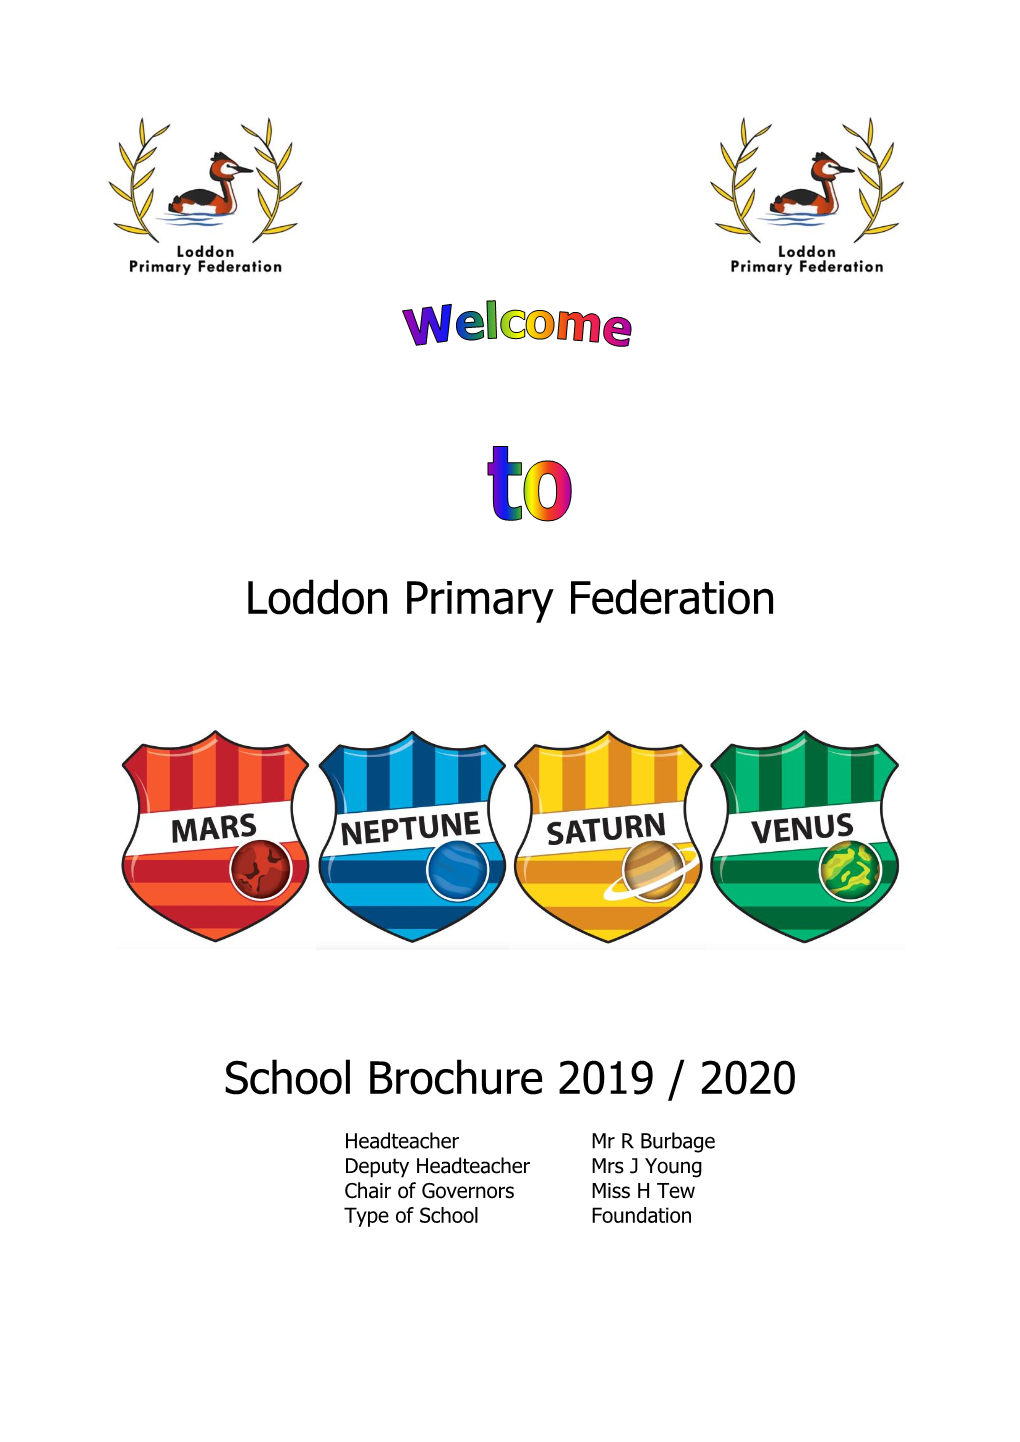 Loddon Primary Federation School Brochure 2019 / 2020